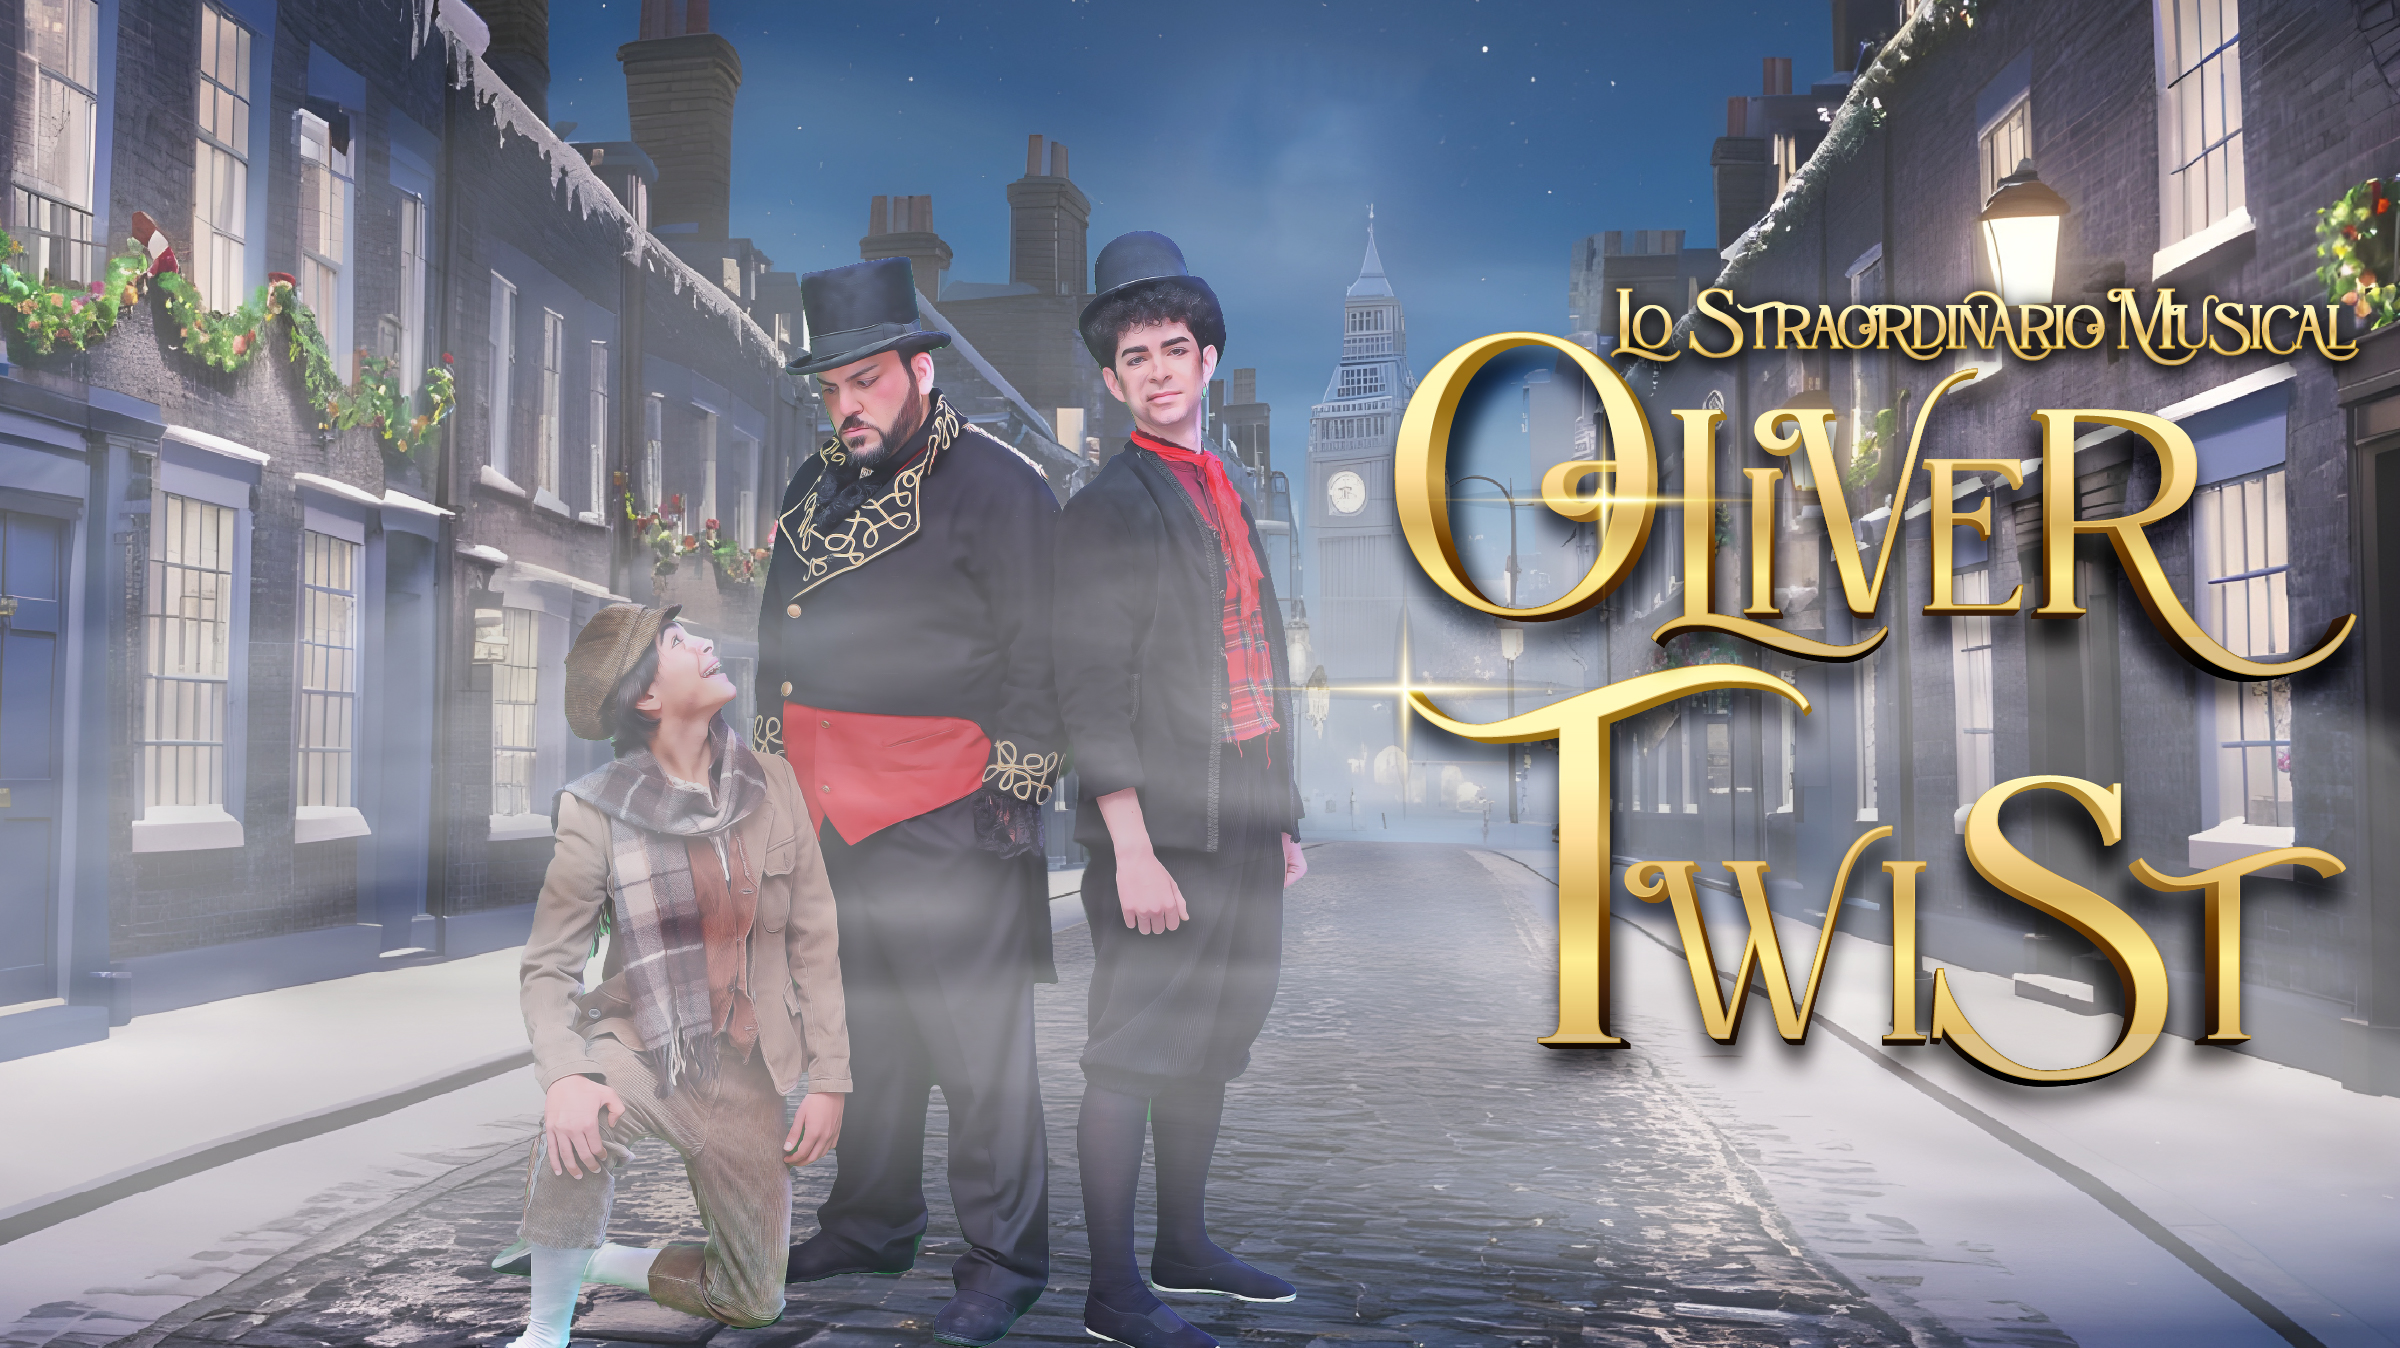 lo straordinario musical Oliver Twist